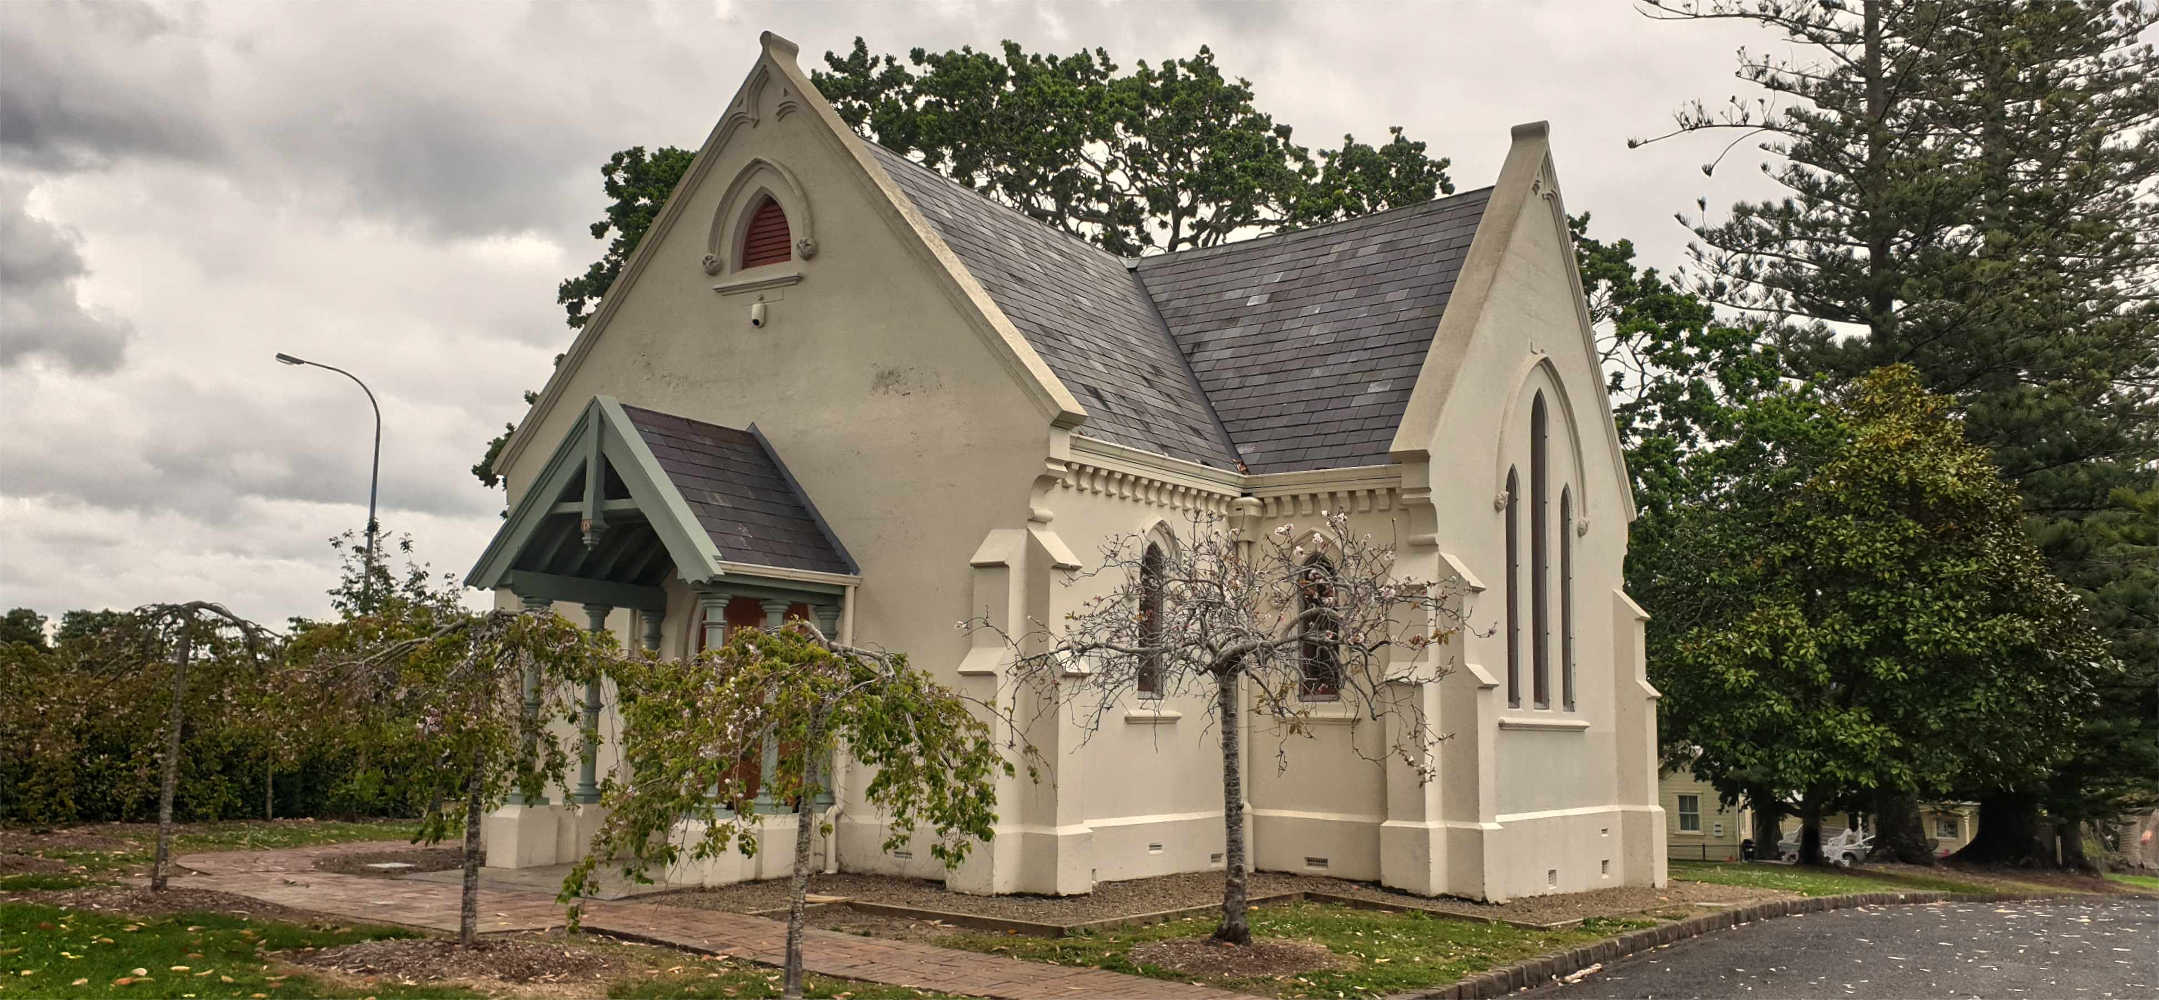 Auckland Waikumete Cemetery historic gothic chapel, New Zealand